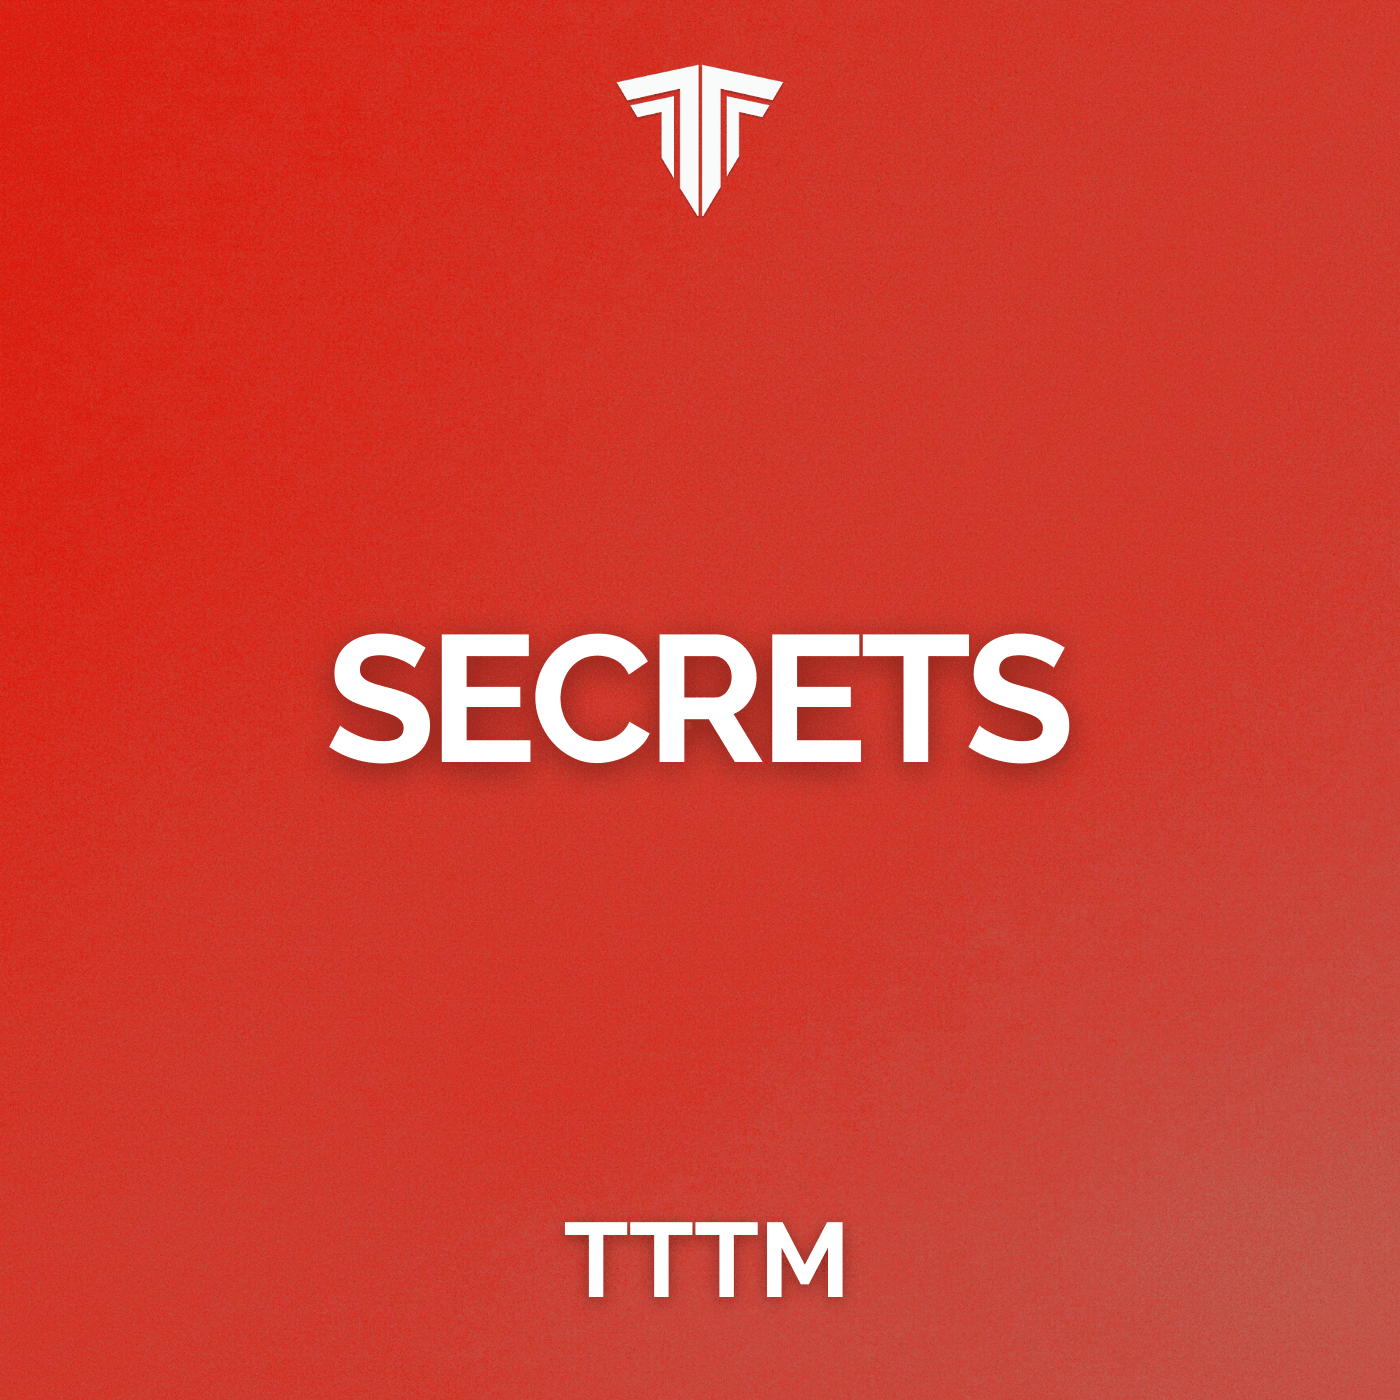 Secrets - Tracks To The Max